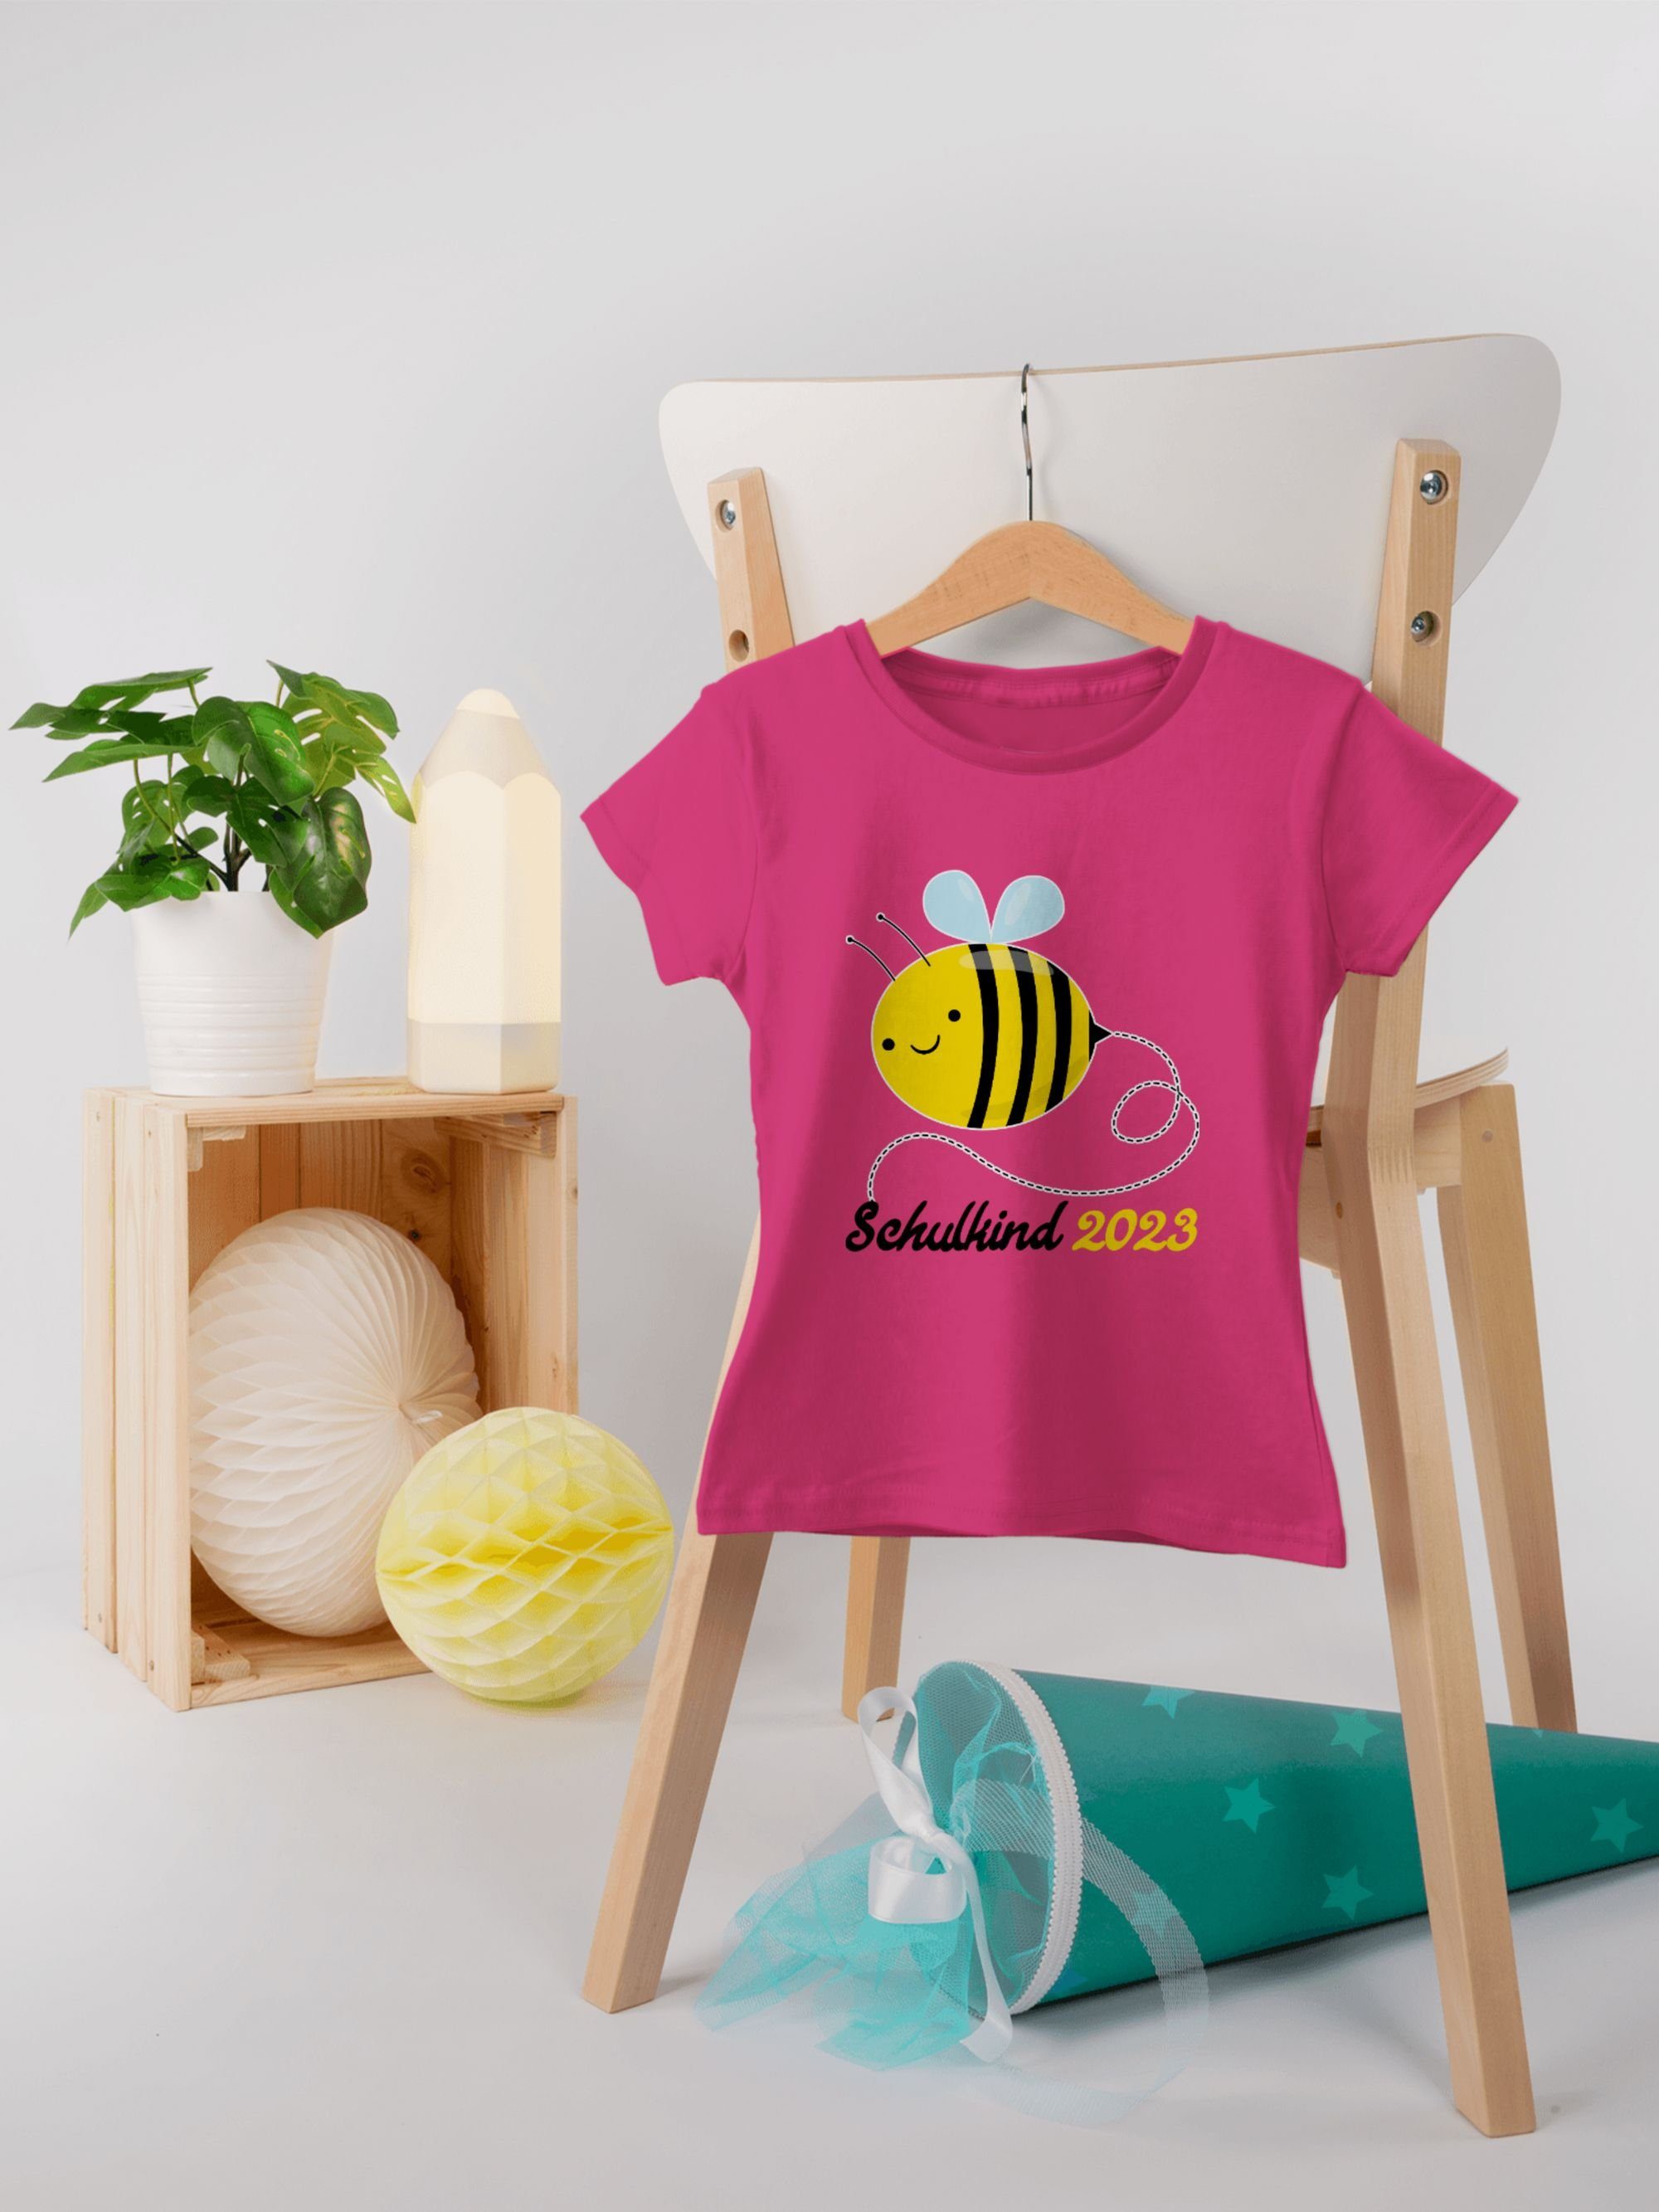 Shirtracer T-Shirt Biene Einschulung Fuchsia Mädchen 2023 Schulkind 1